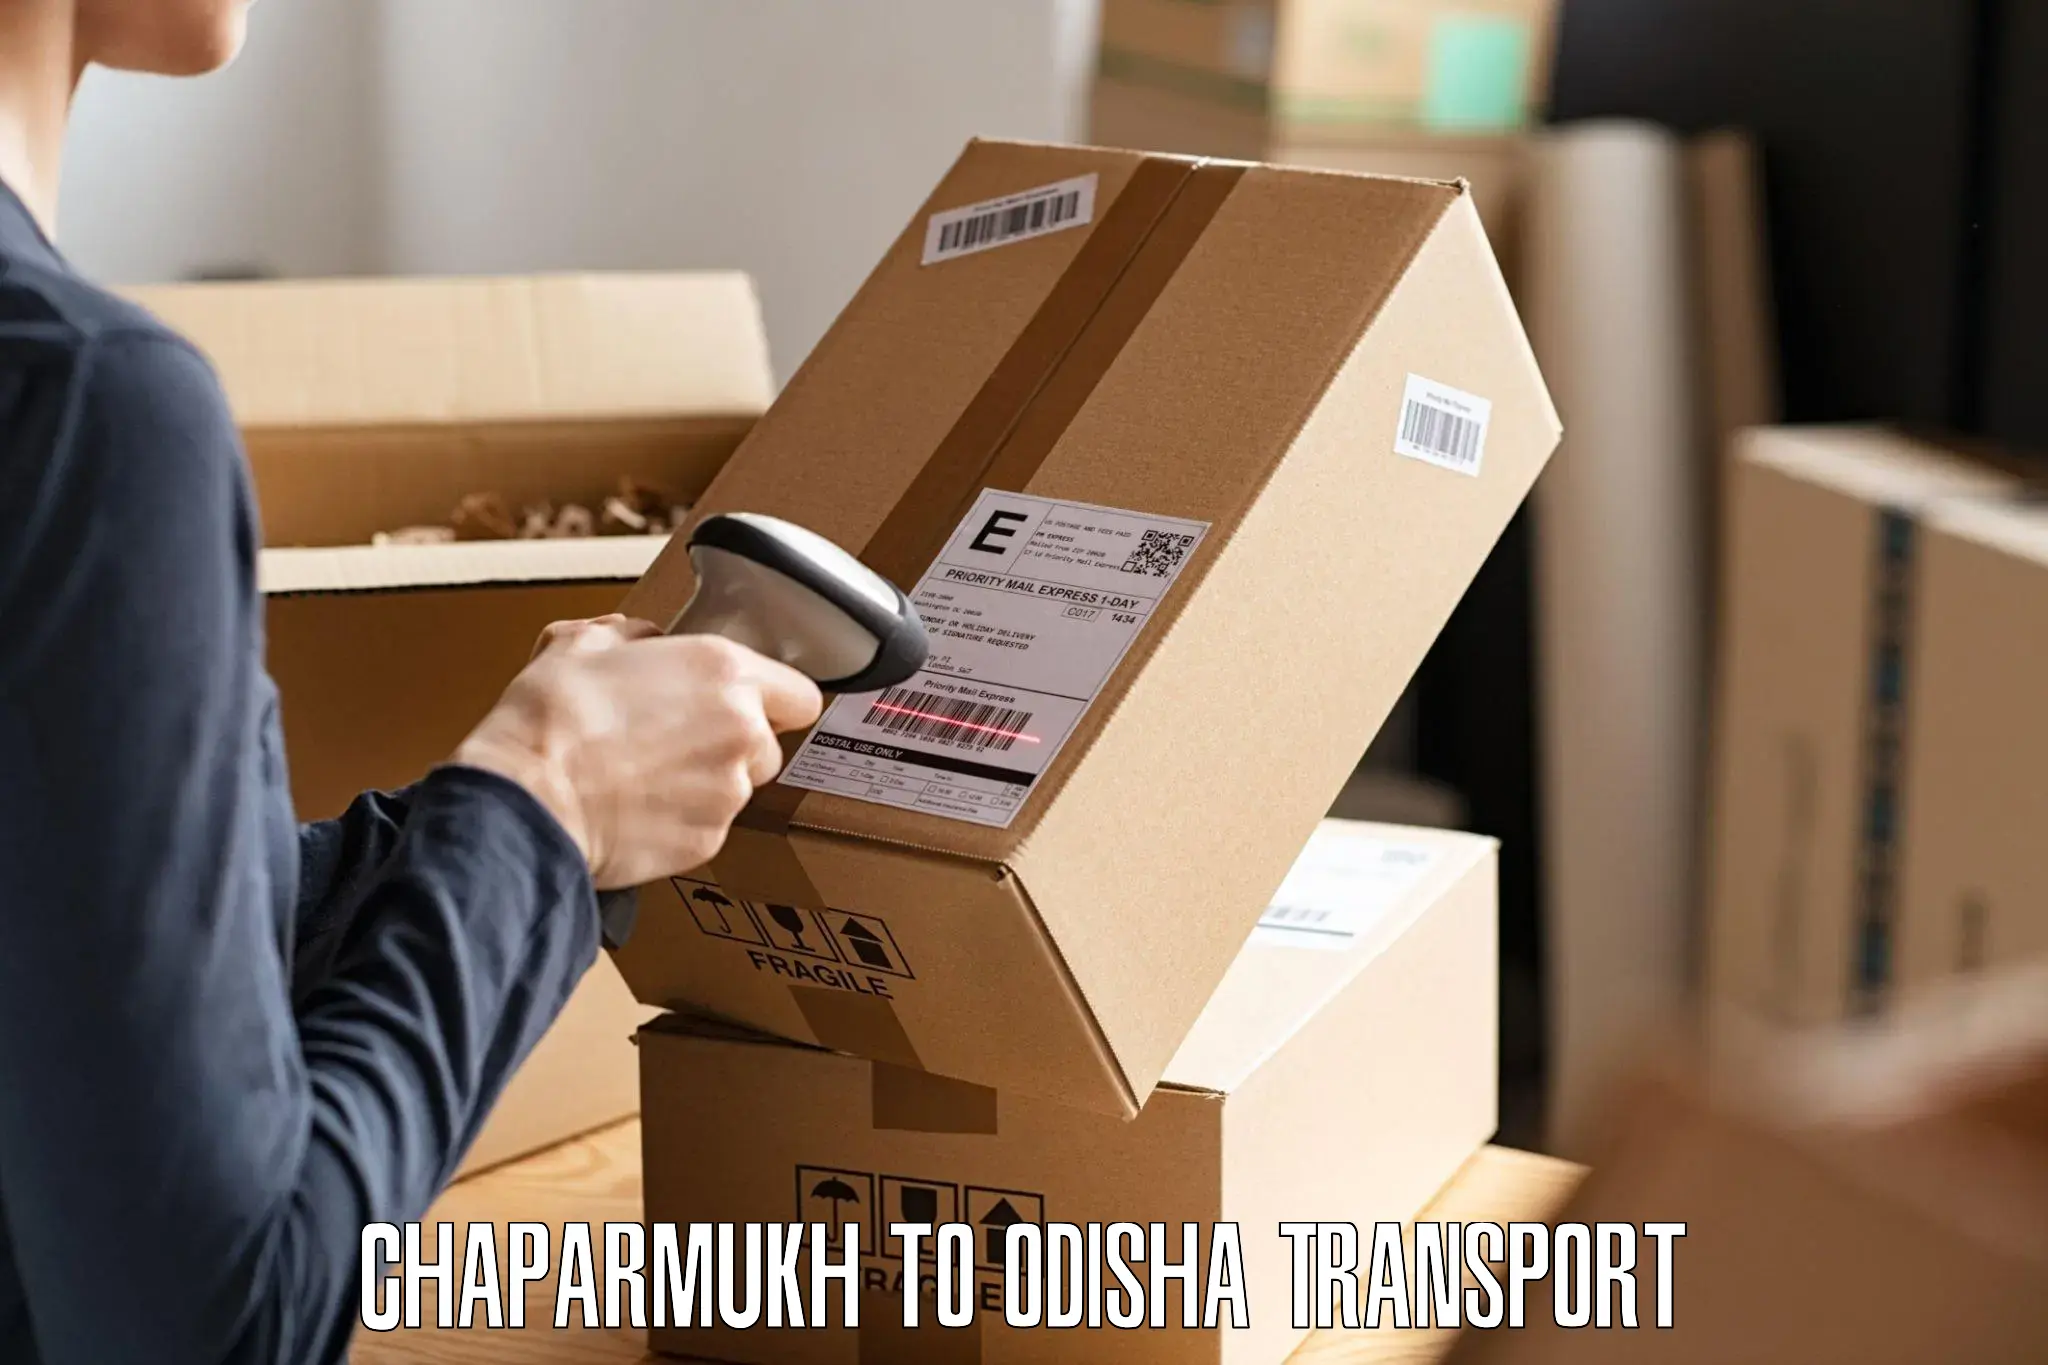 Two wheeler parcel service Chaparmukh to Pallahara